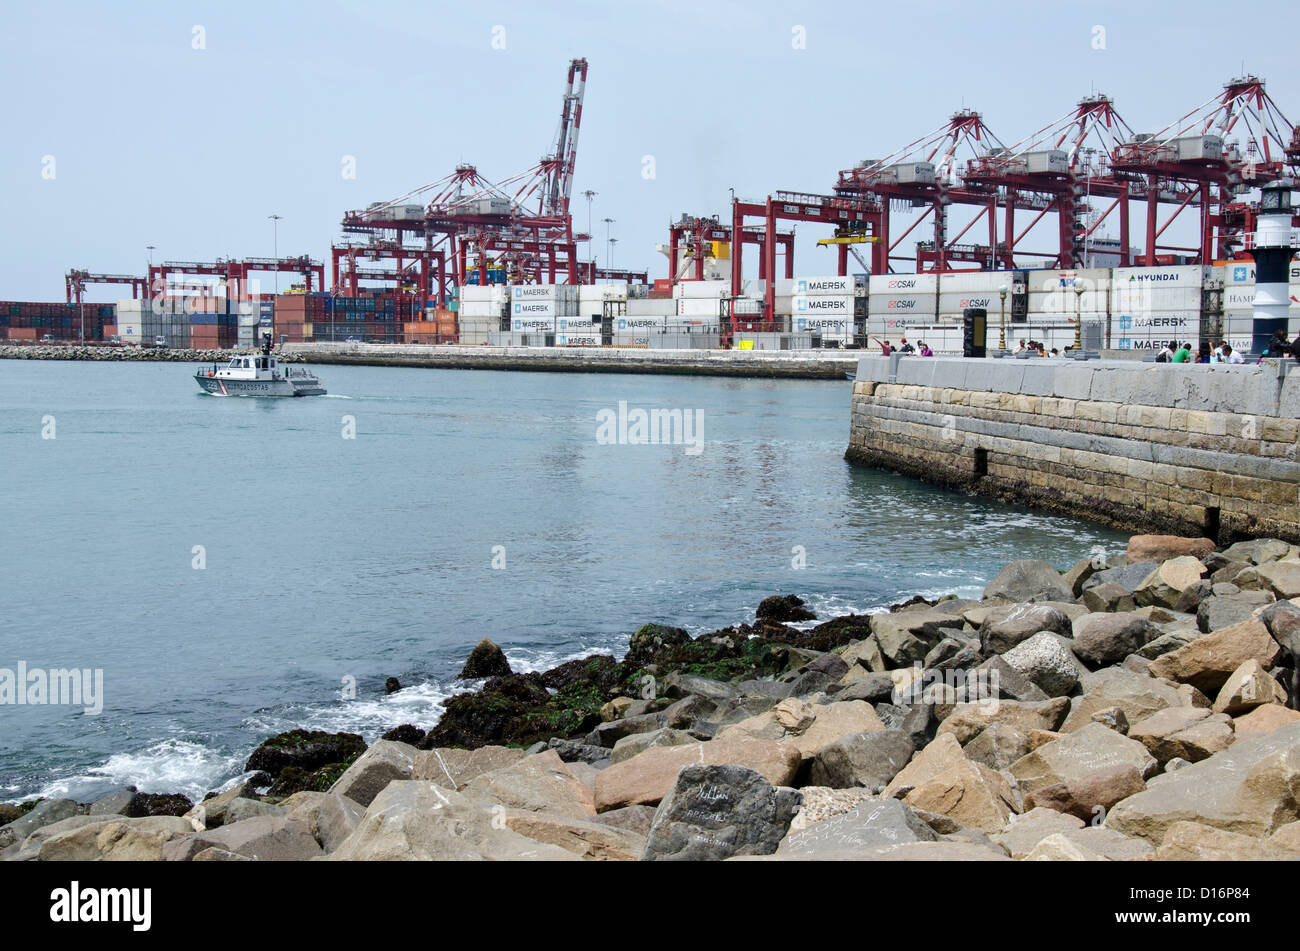 Puerto callao fotografías e imágenes de alta resolución - Alamy